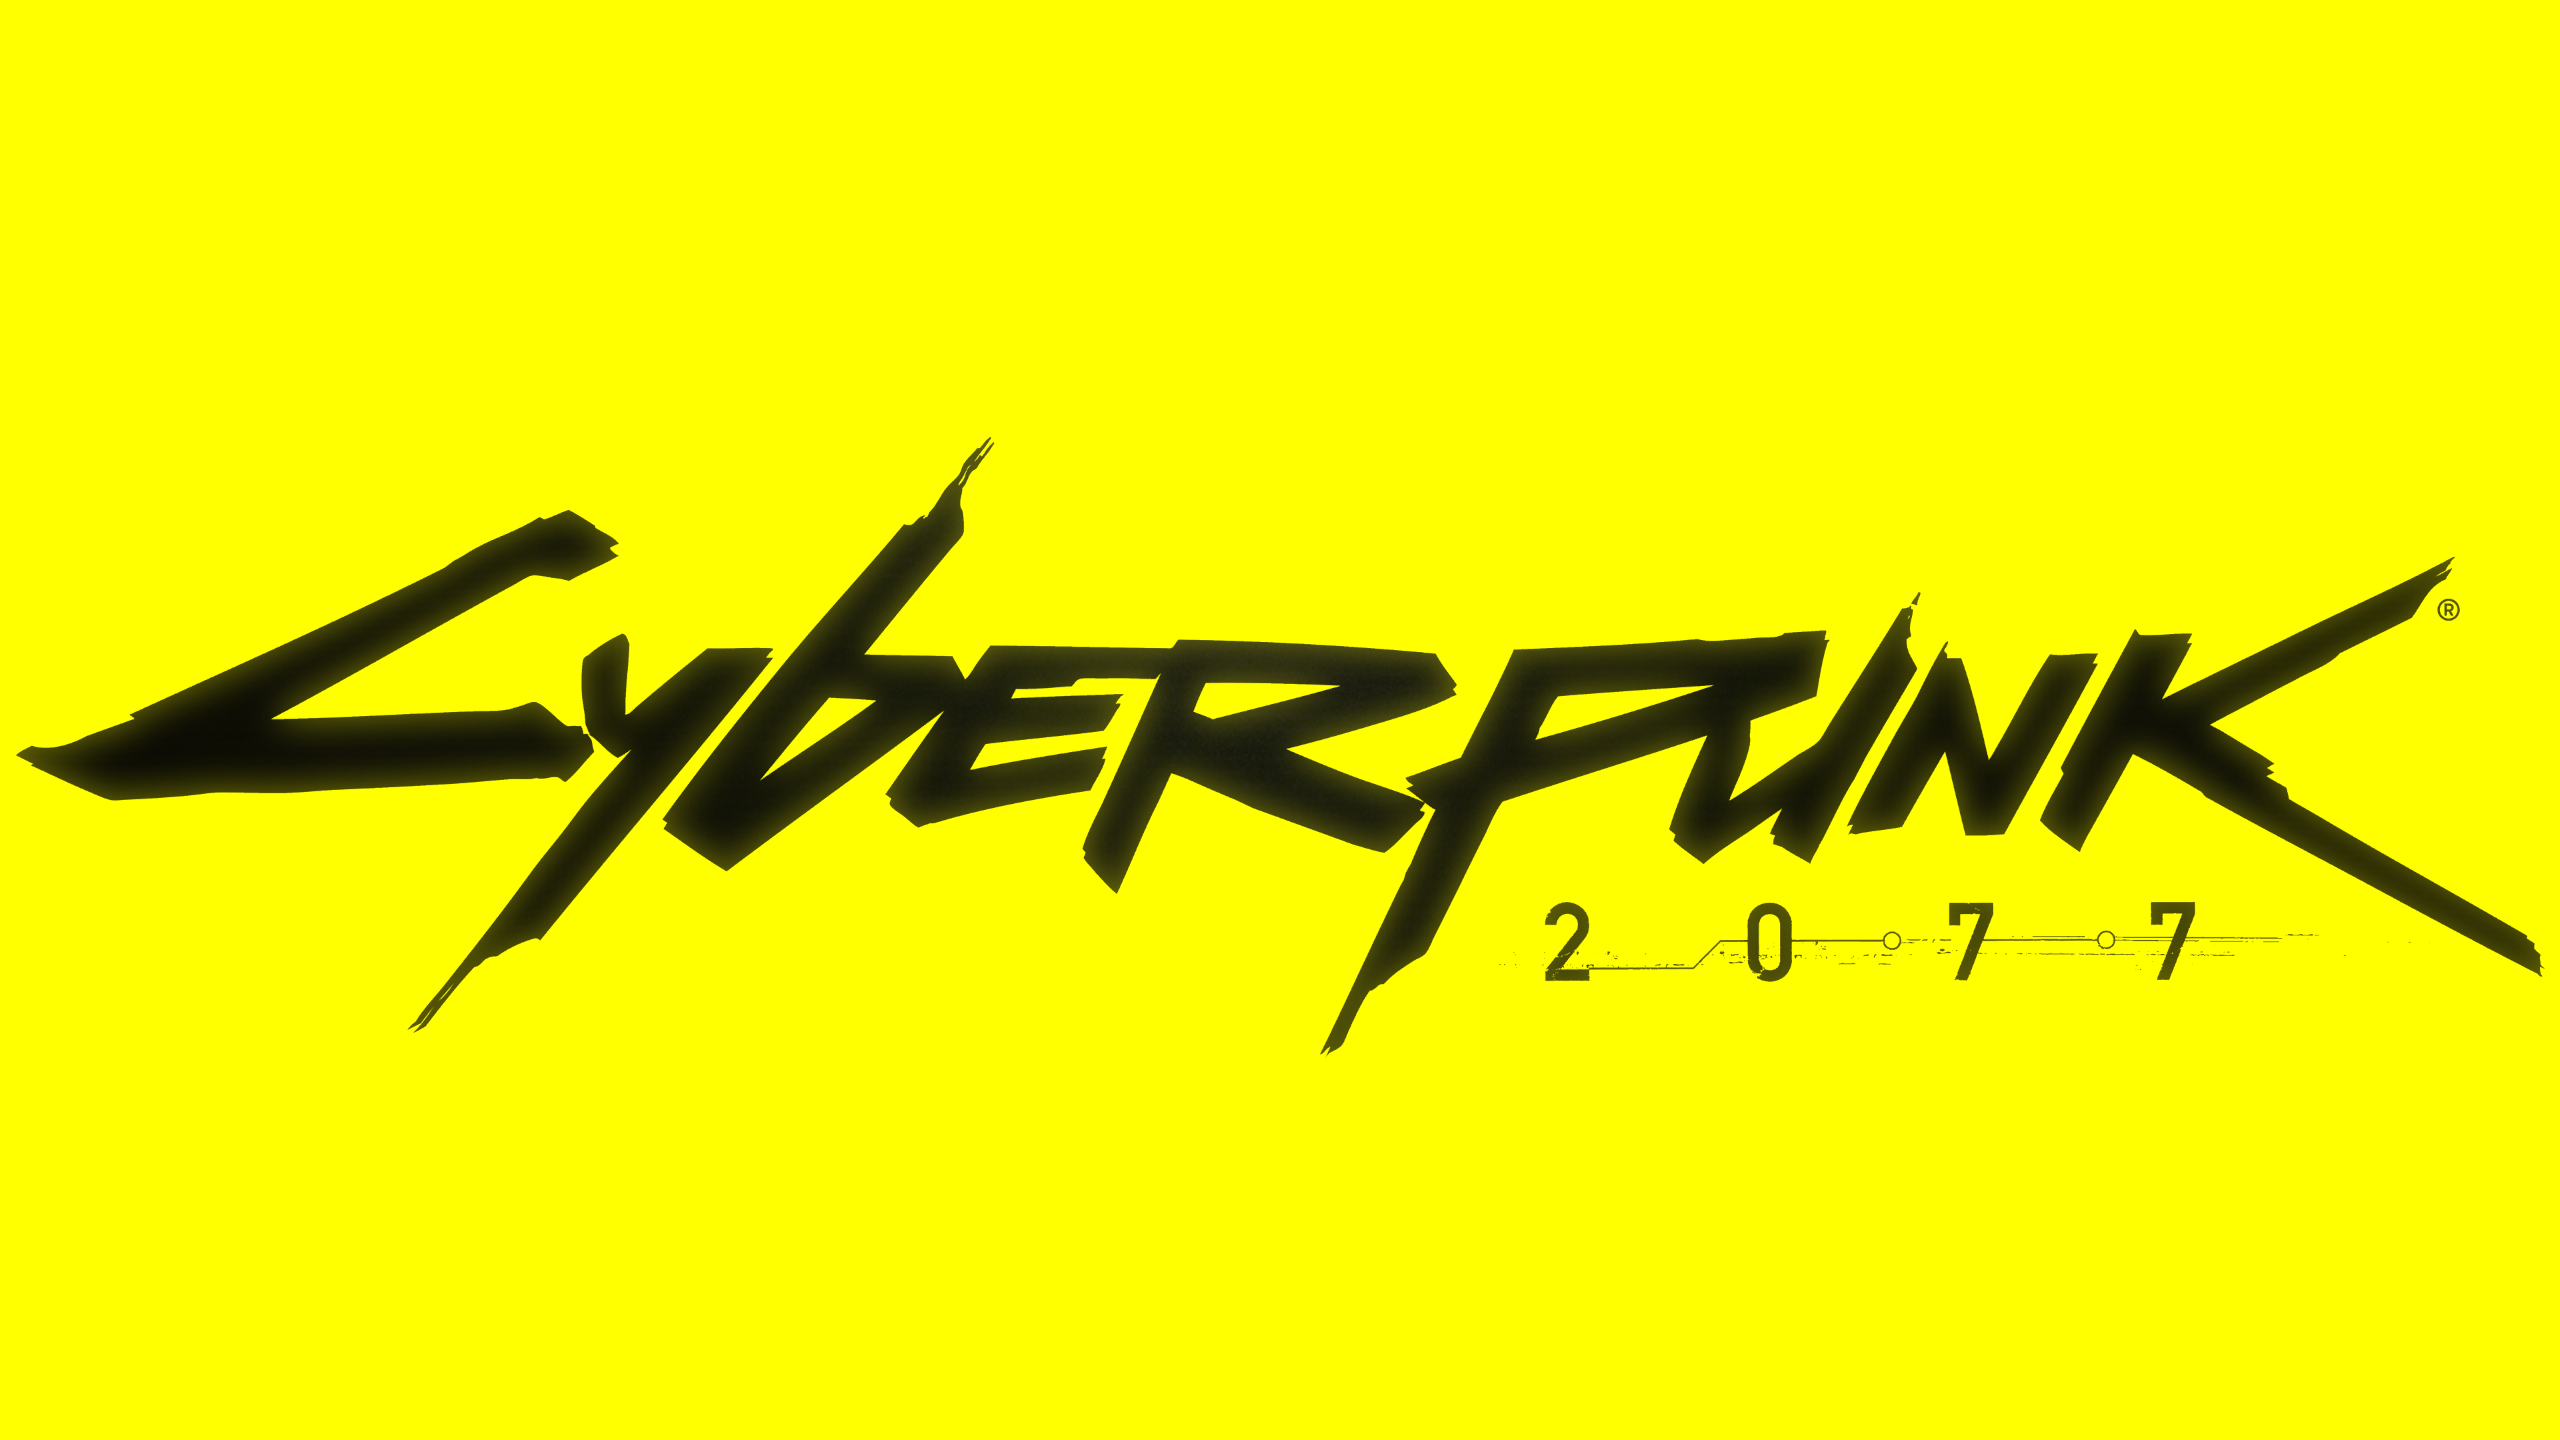 Cyberpunk logo 21265415 фото 53